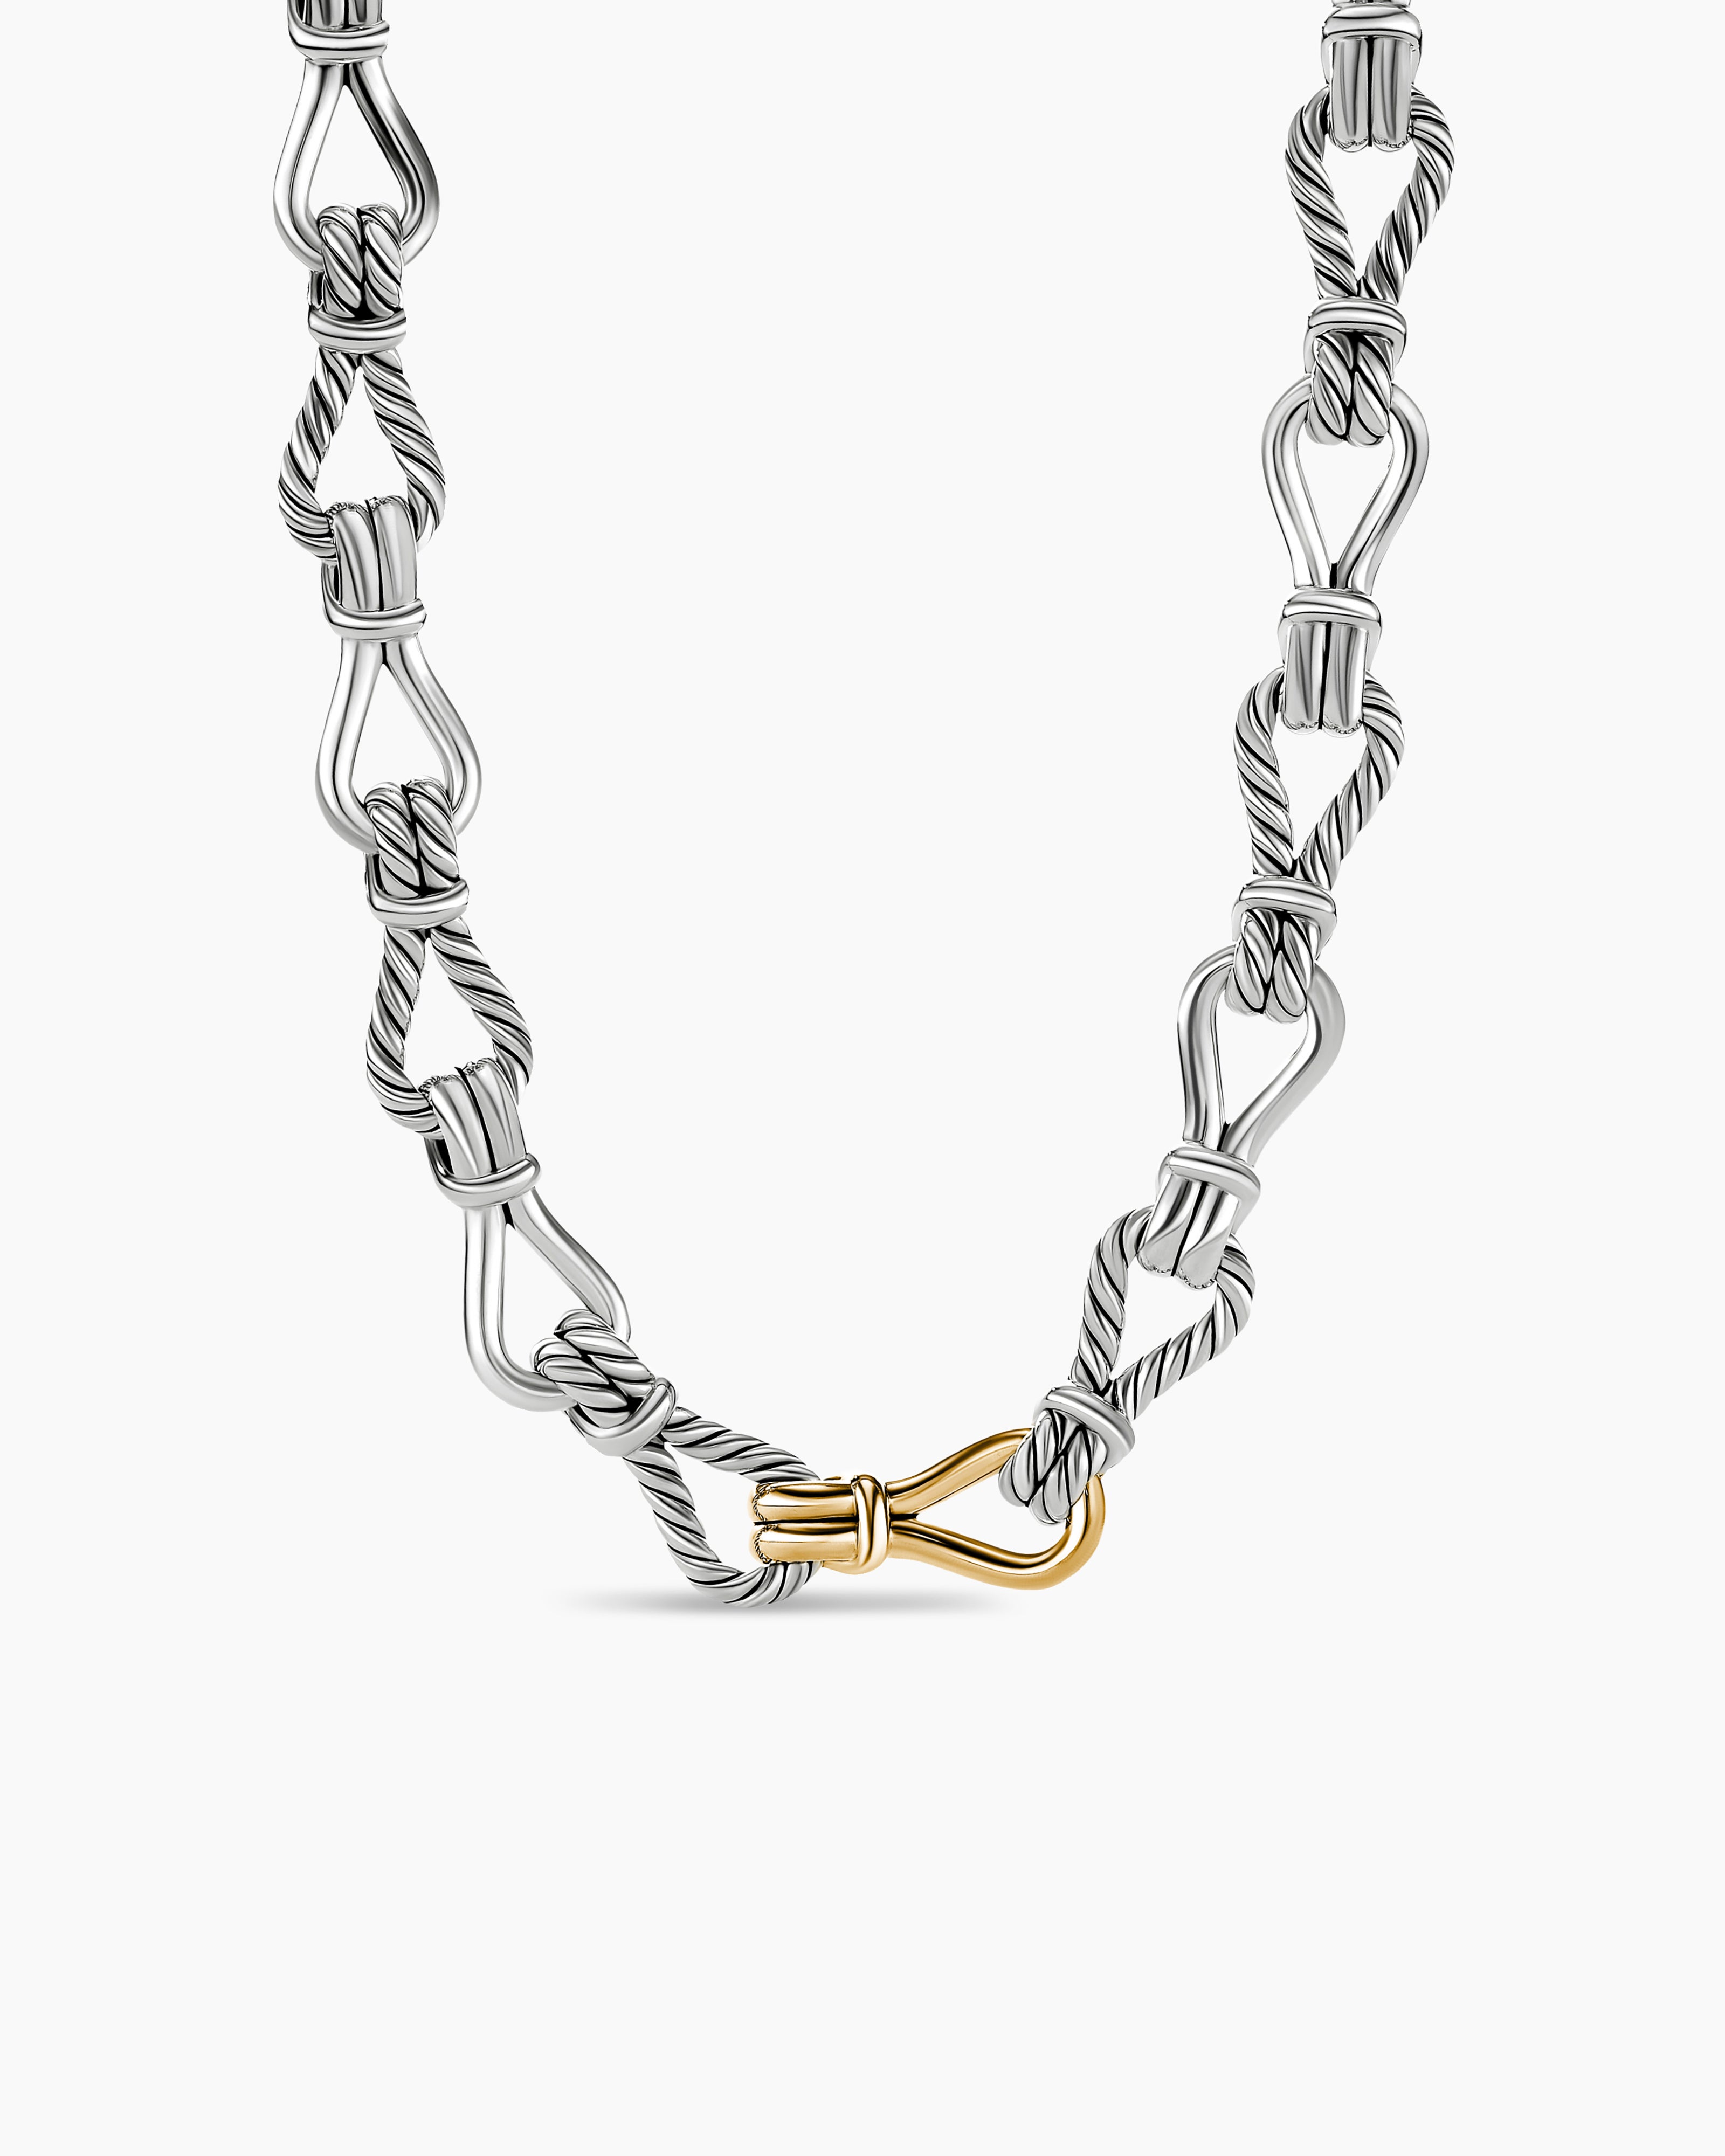 NL(ニール) Orbit silver925 chain necklace - アクセサリー